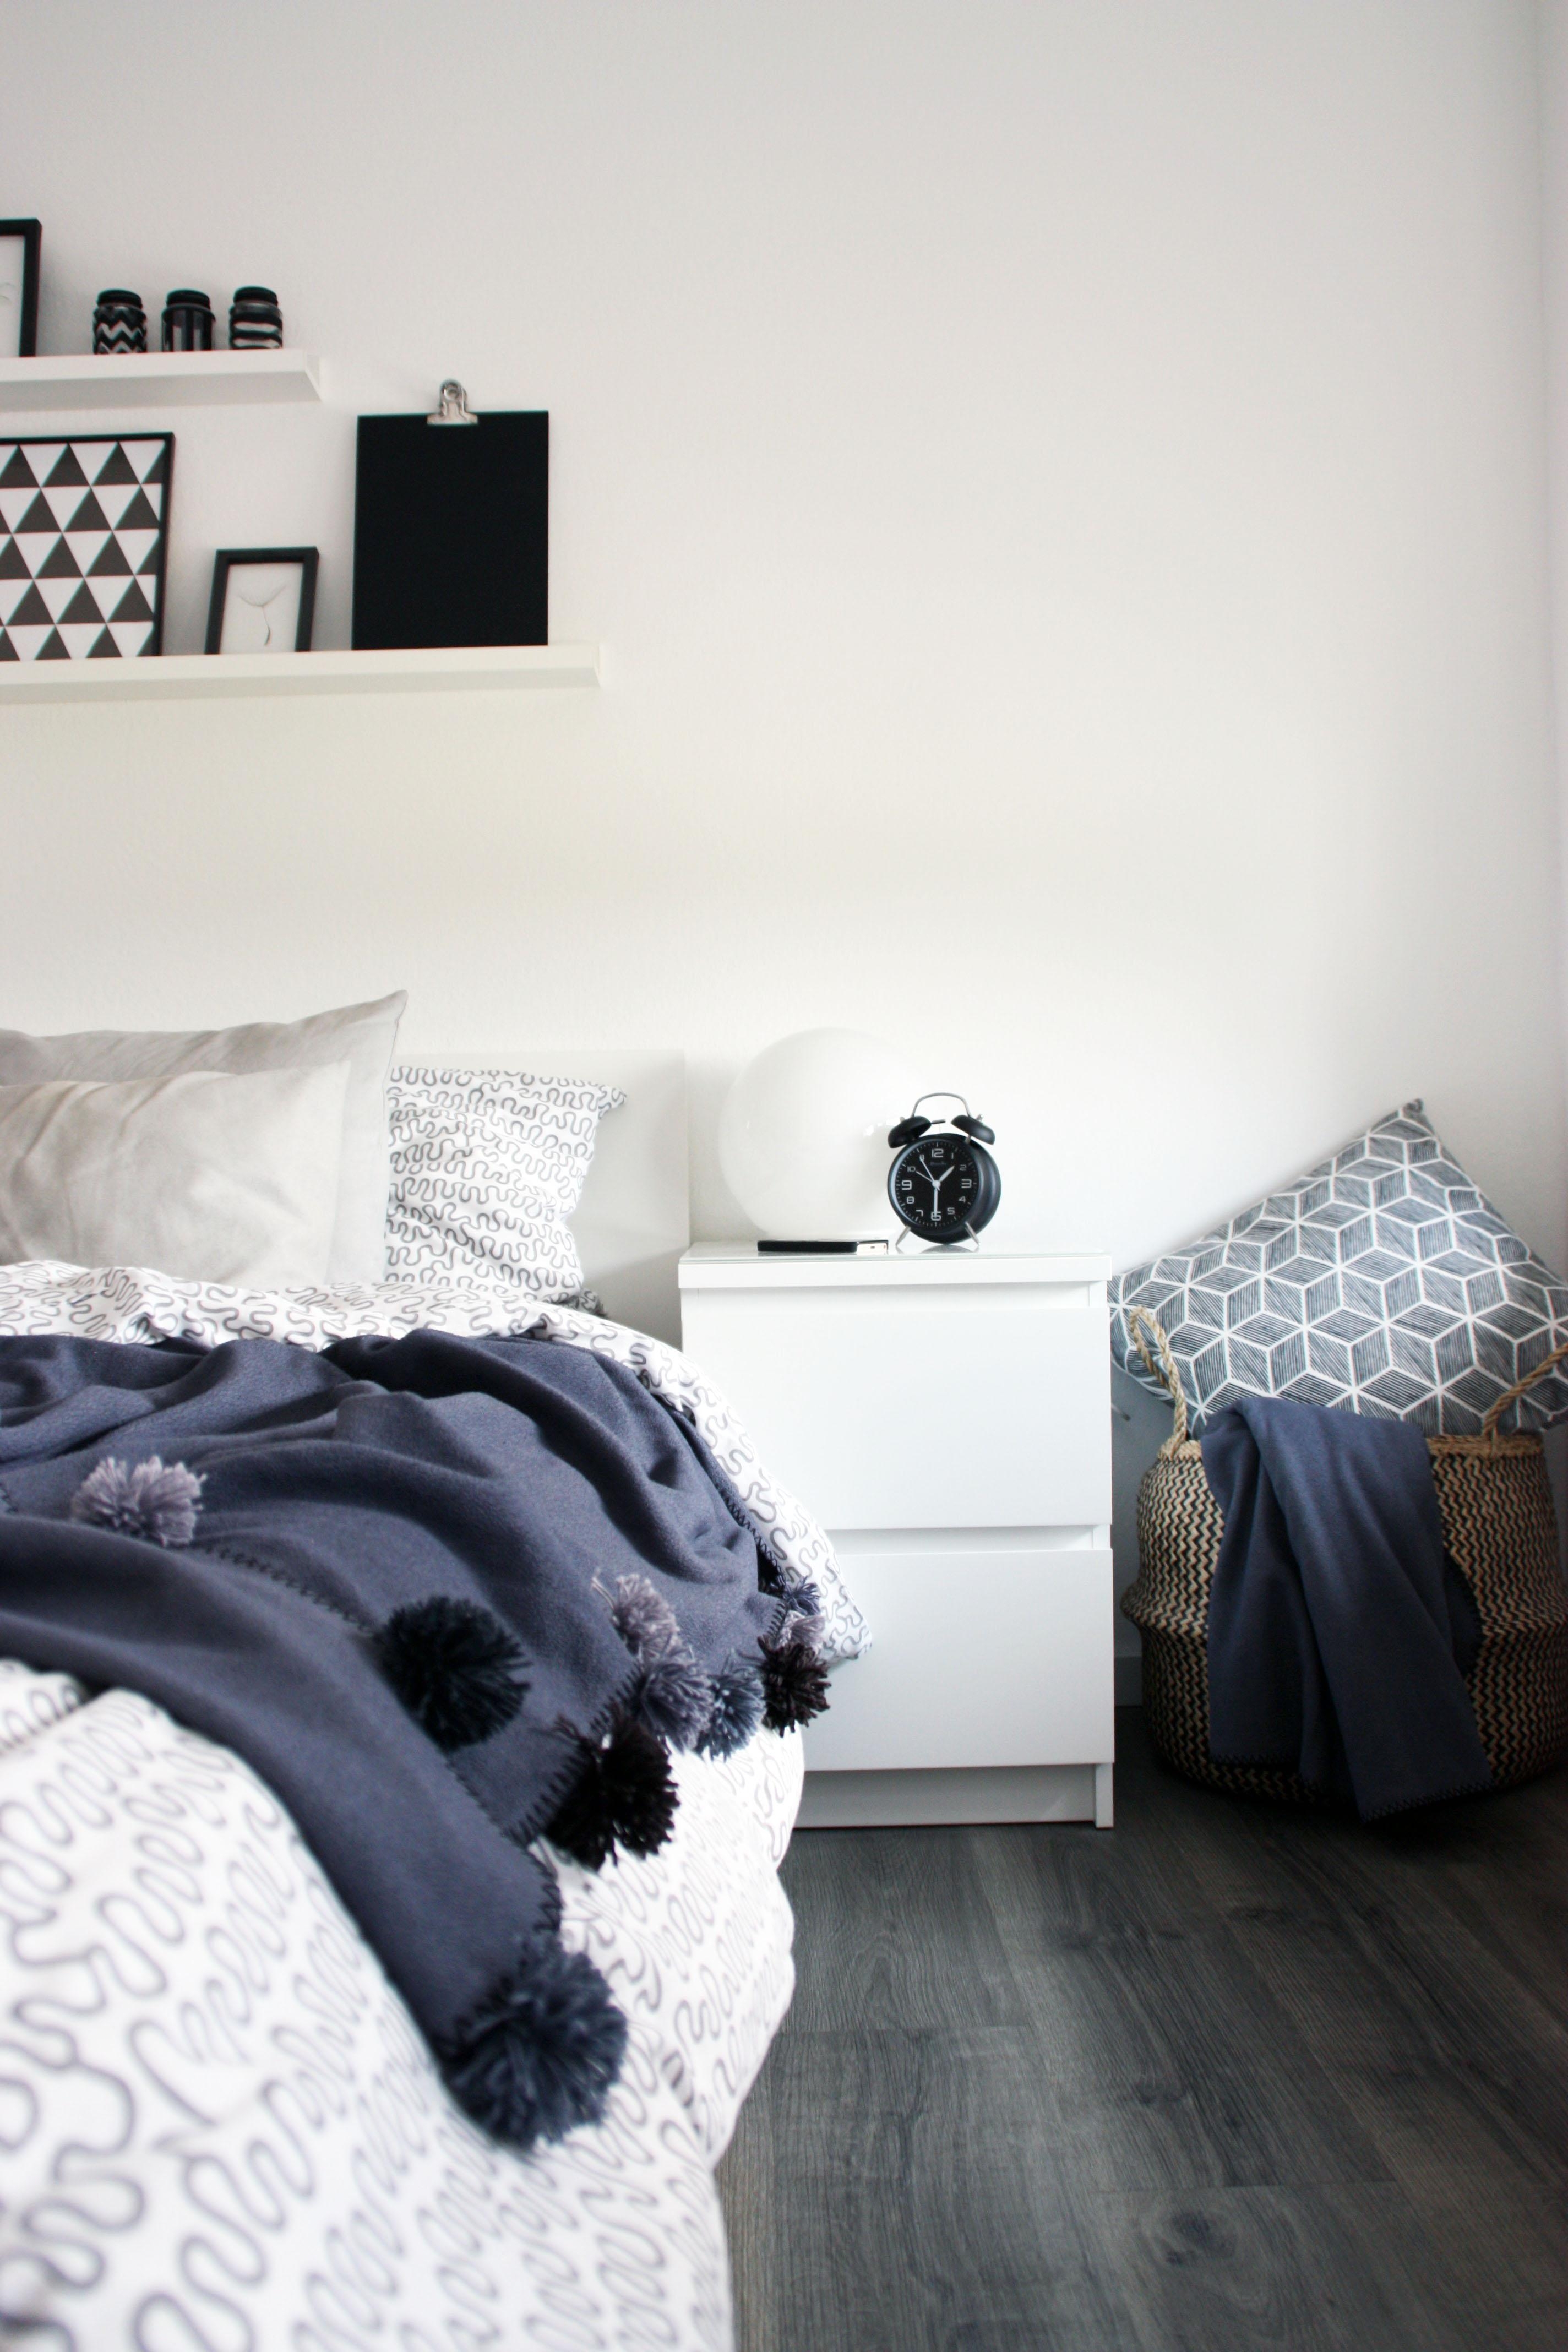 bedROOM

#schlafzimmer #tagesdecke #bedroom #cosy #greycrownhome #living #wohnen #grey #white #hyggelig #kuschelig